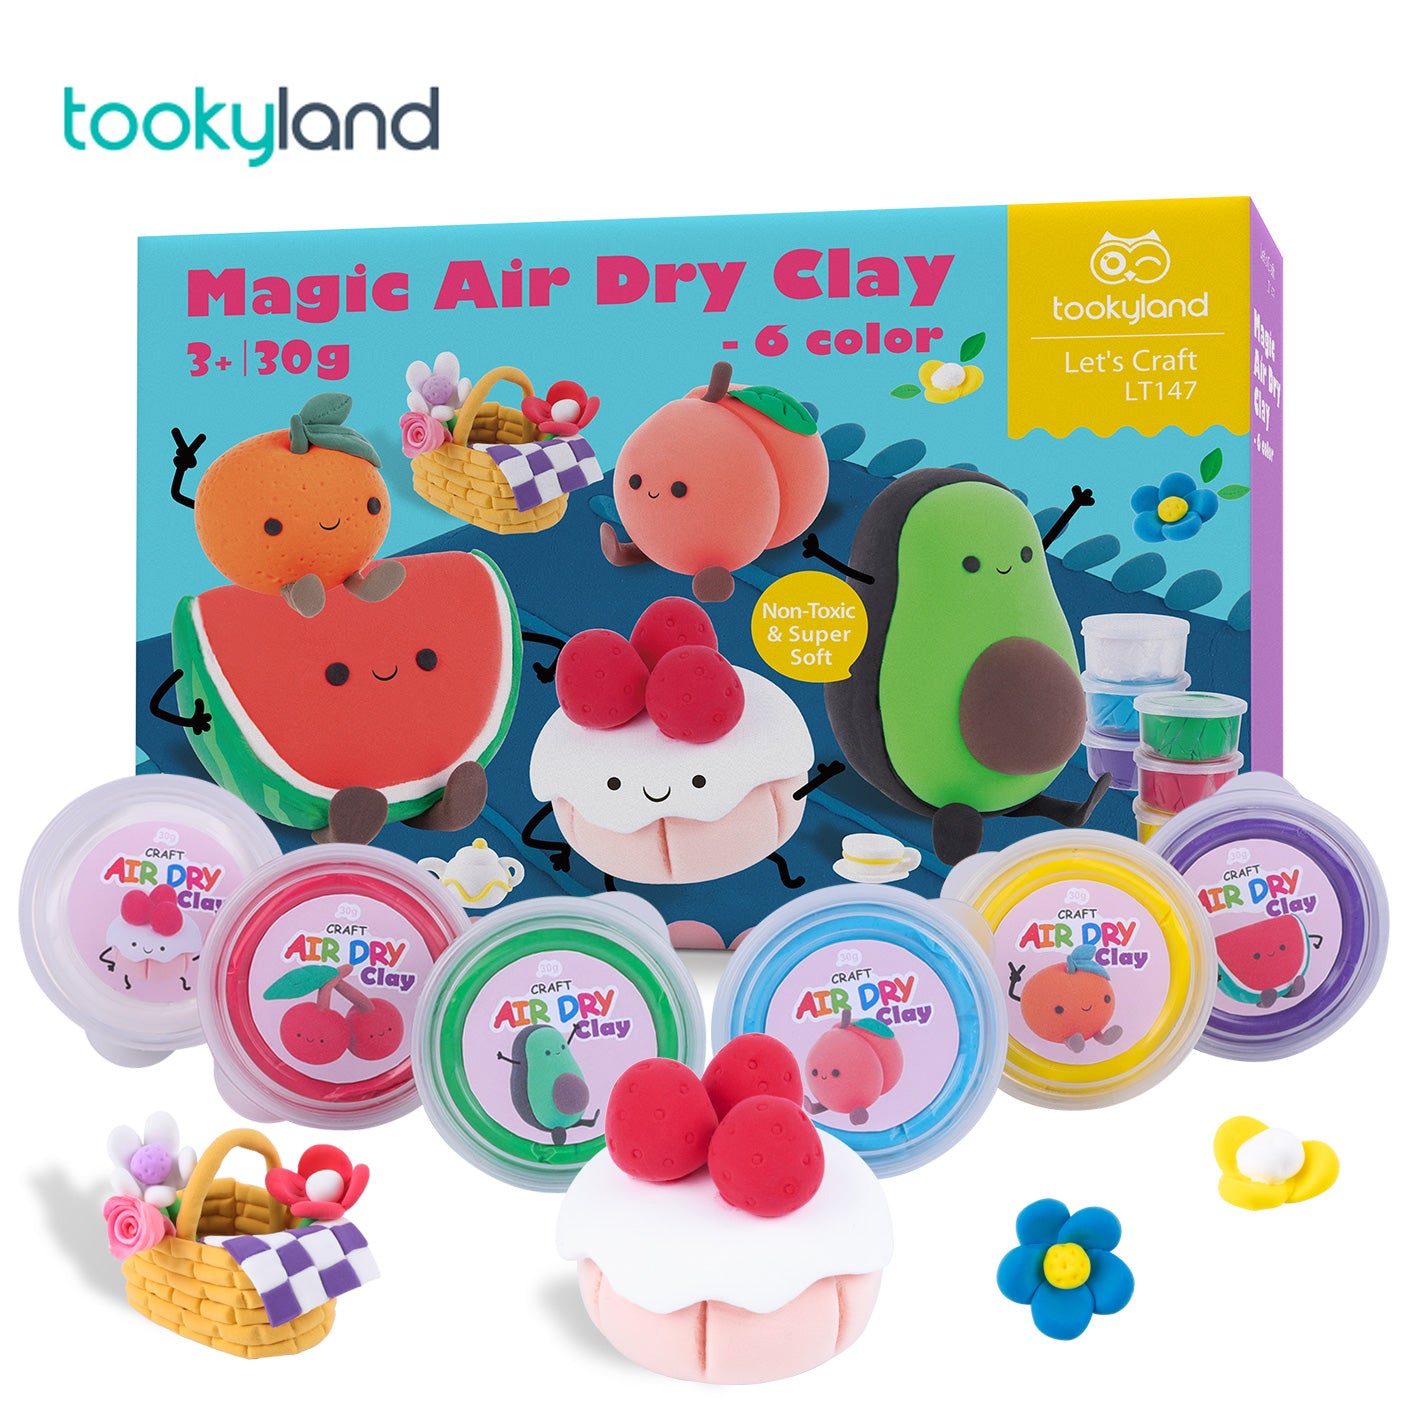 Tookyland Magic Air Dry Clay (6 Colors)